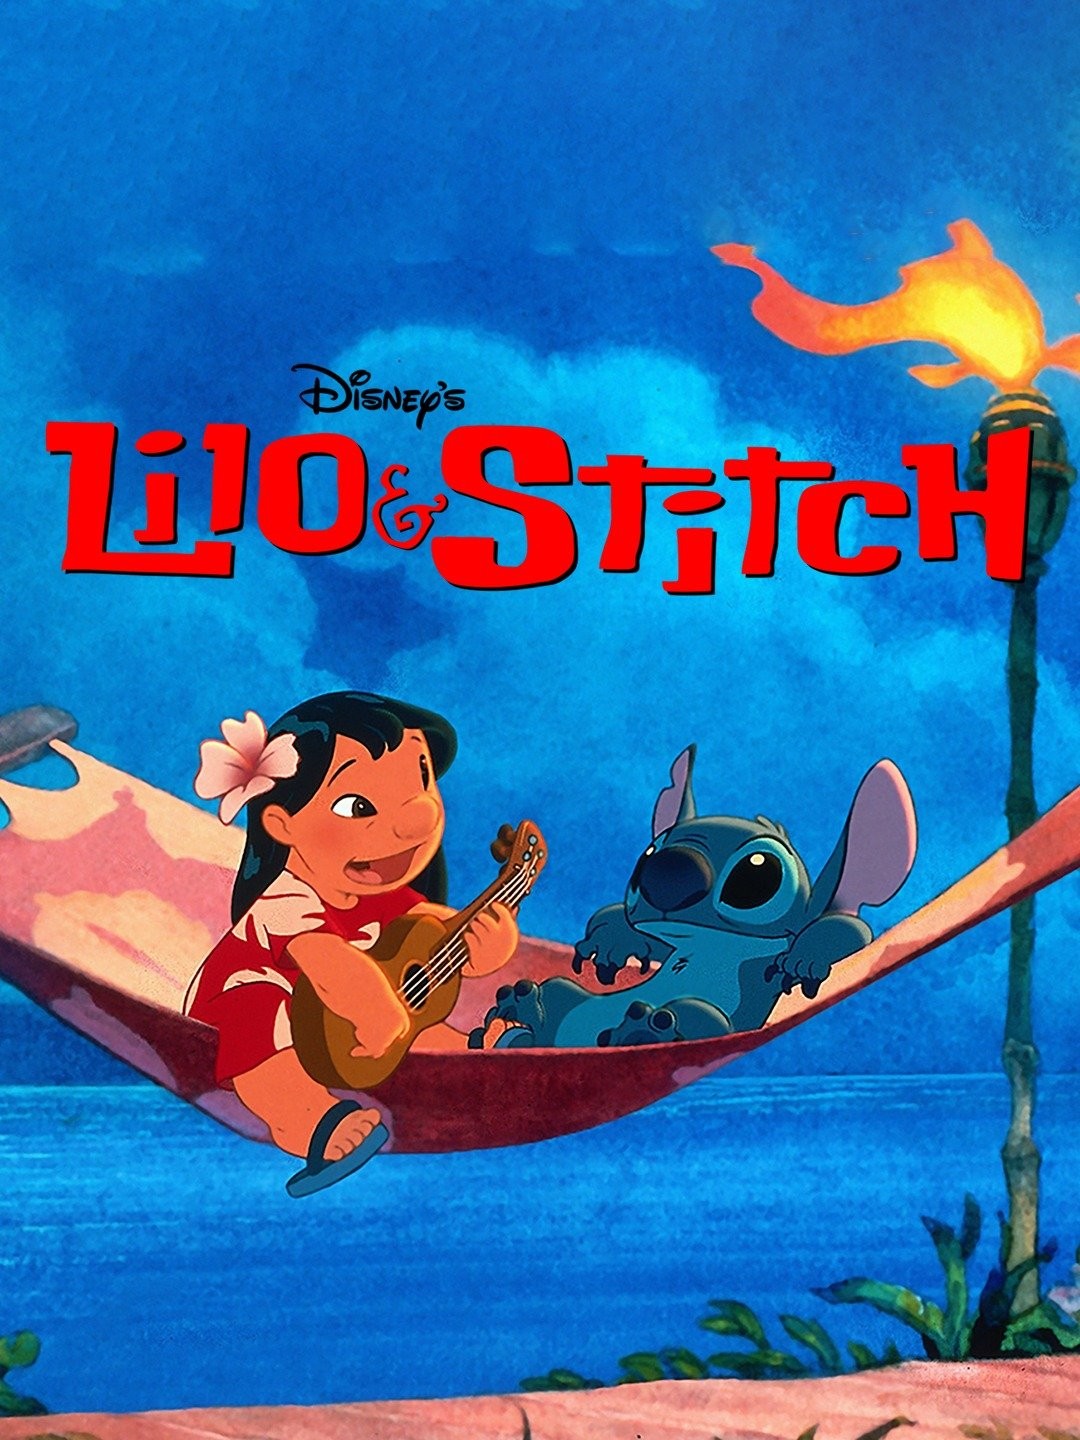 The Stitch TV Show 